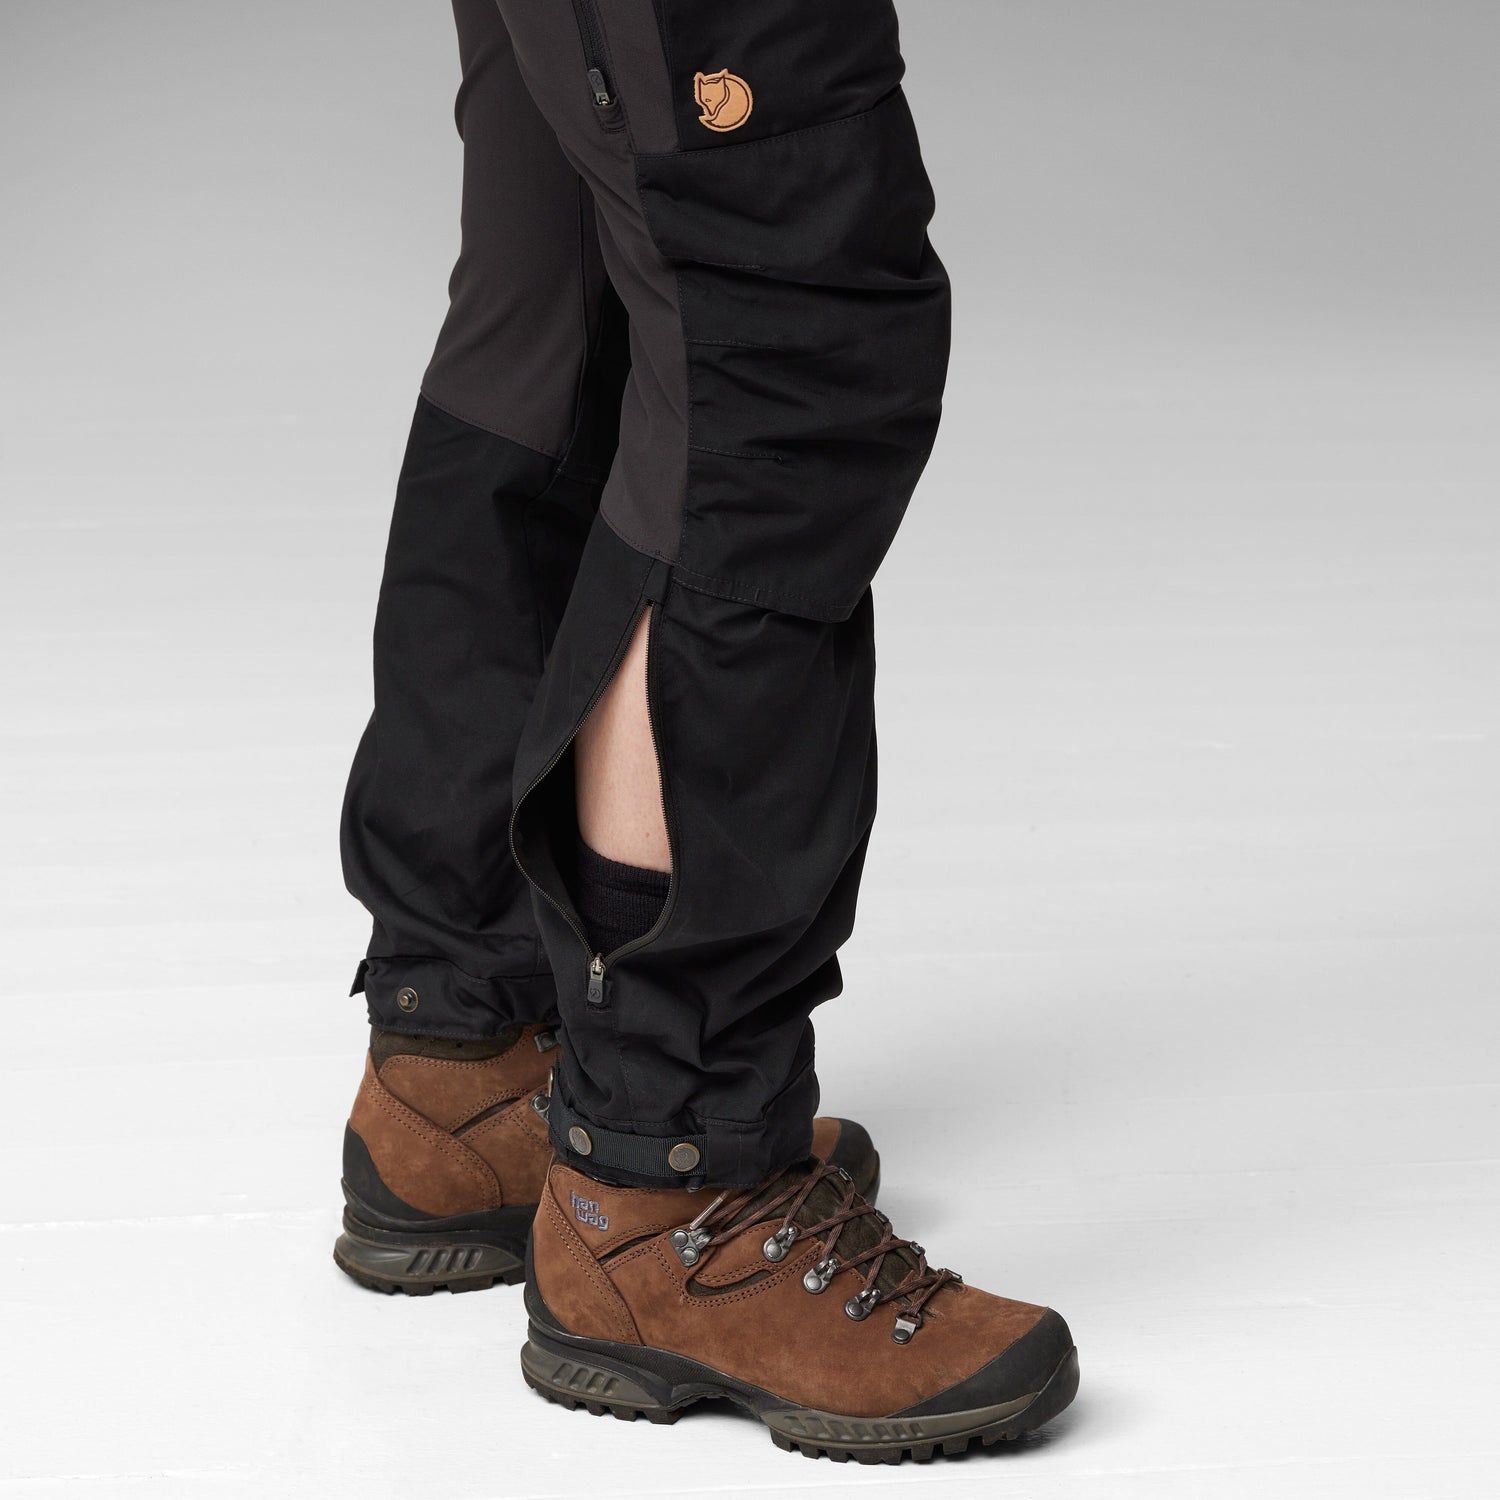 Fjällräven - W's Keb Trousers - G-1000® Eco - Weekendbee - sustainable sportswear